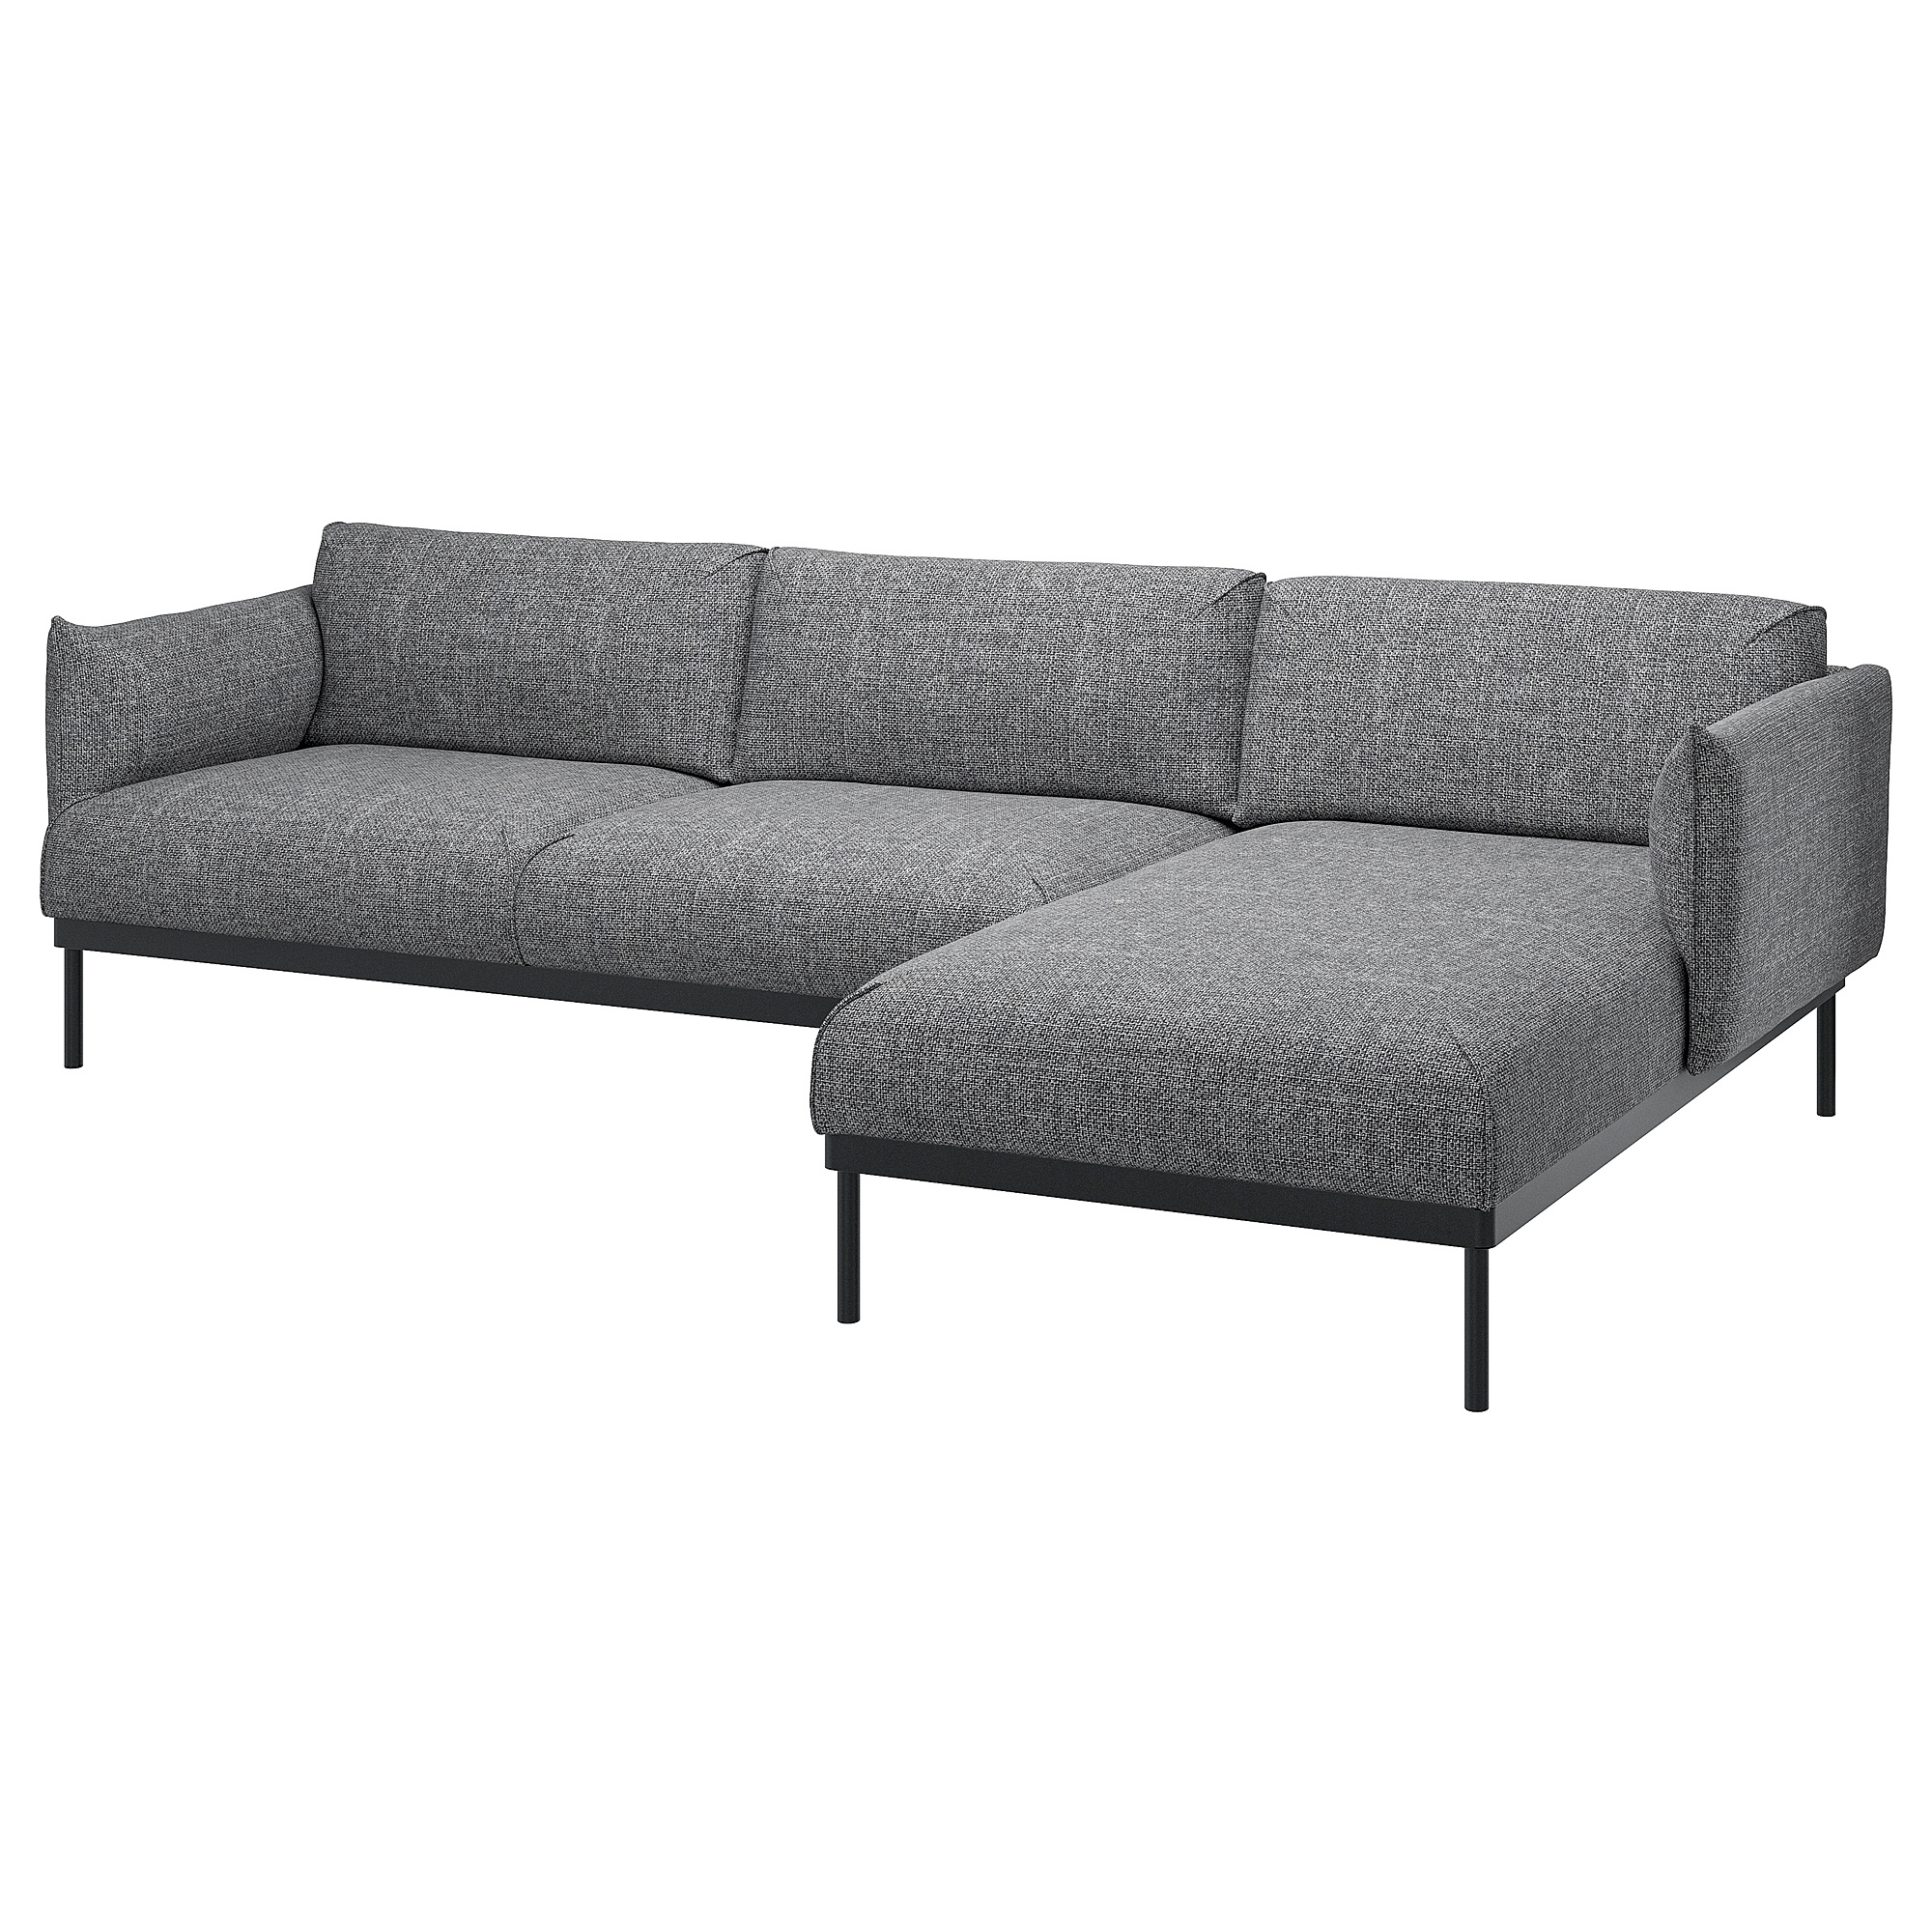 ÄPPLARYD 3-seat sofa with chaise longue